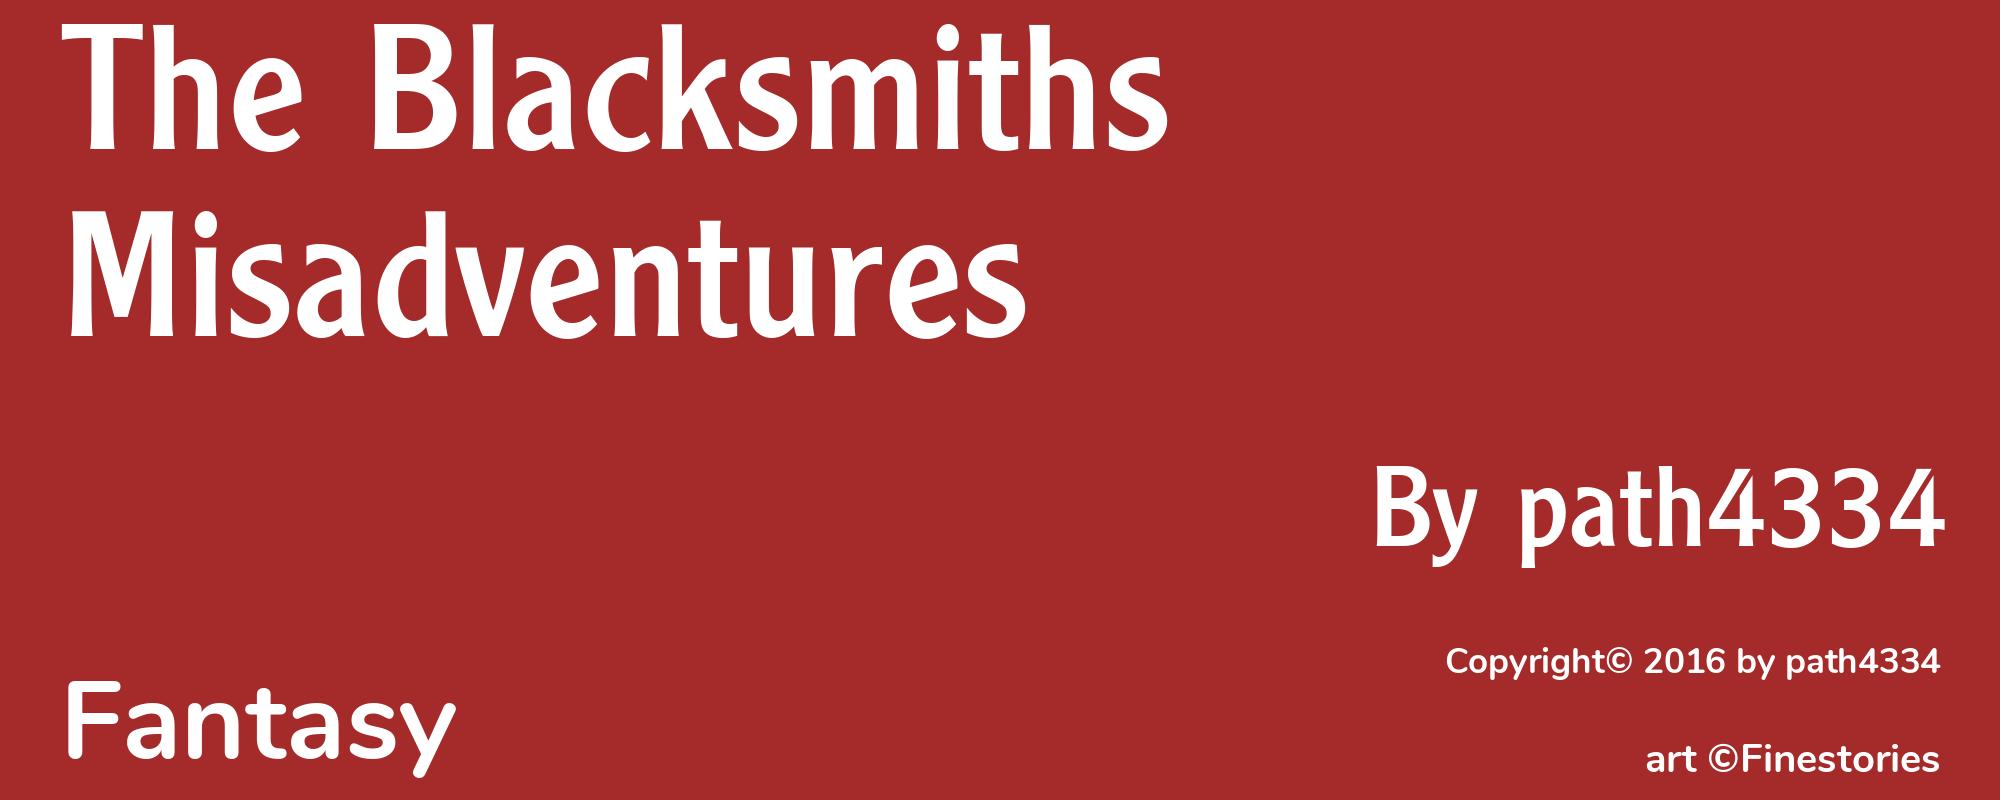 The Blacksmiths Misadventures - Cover